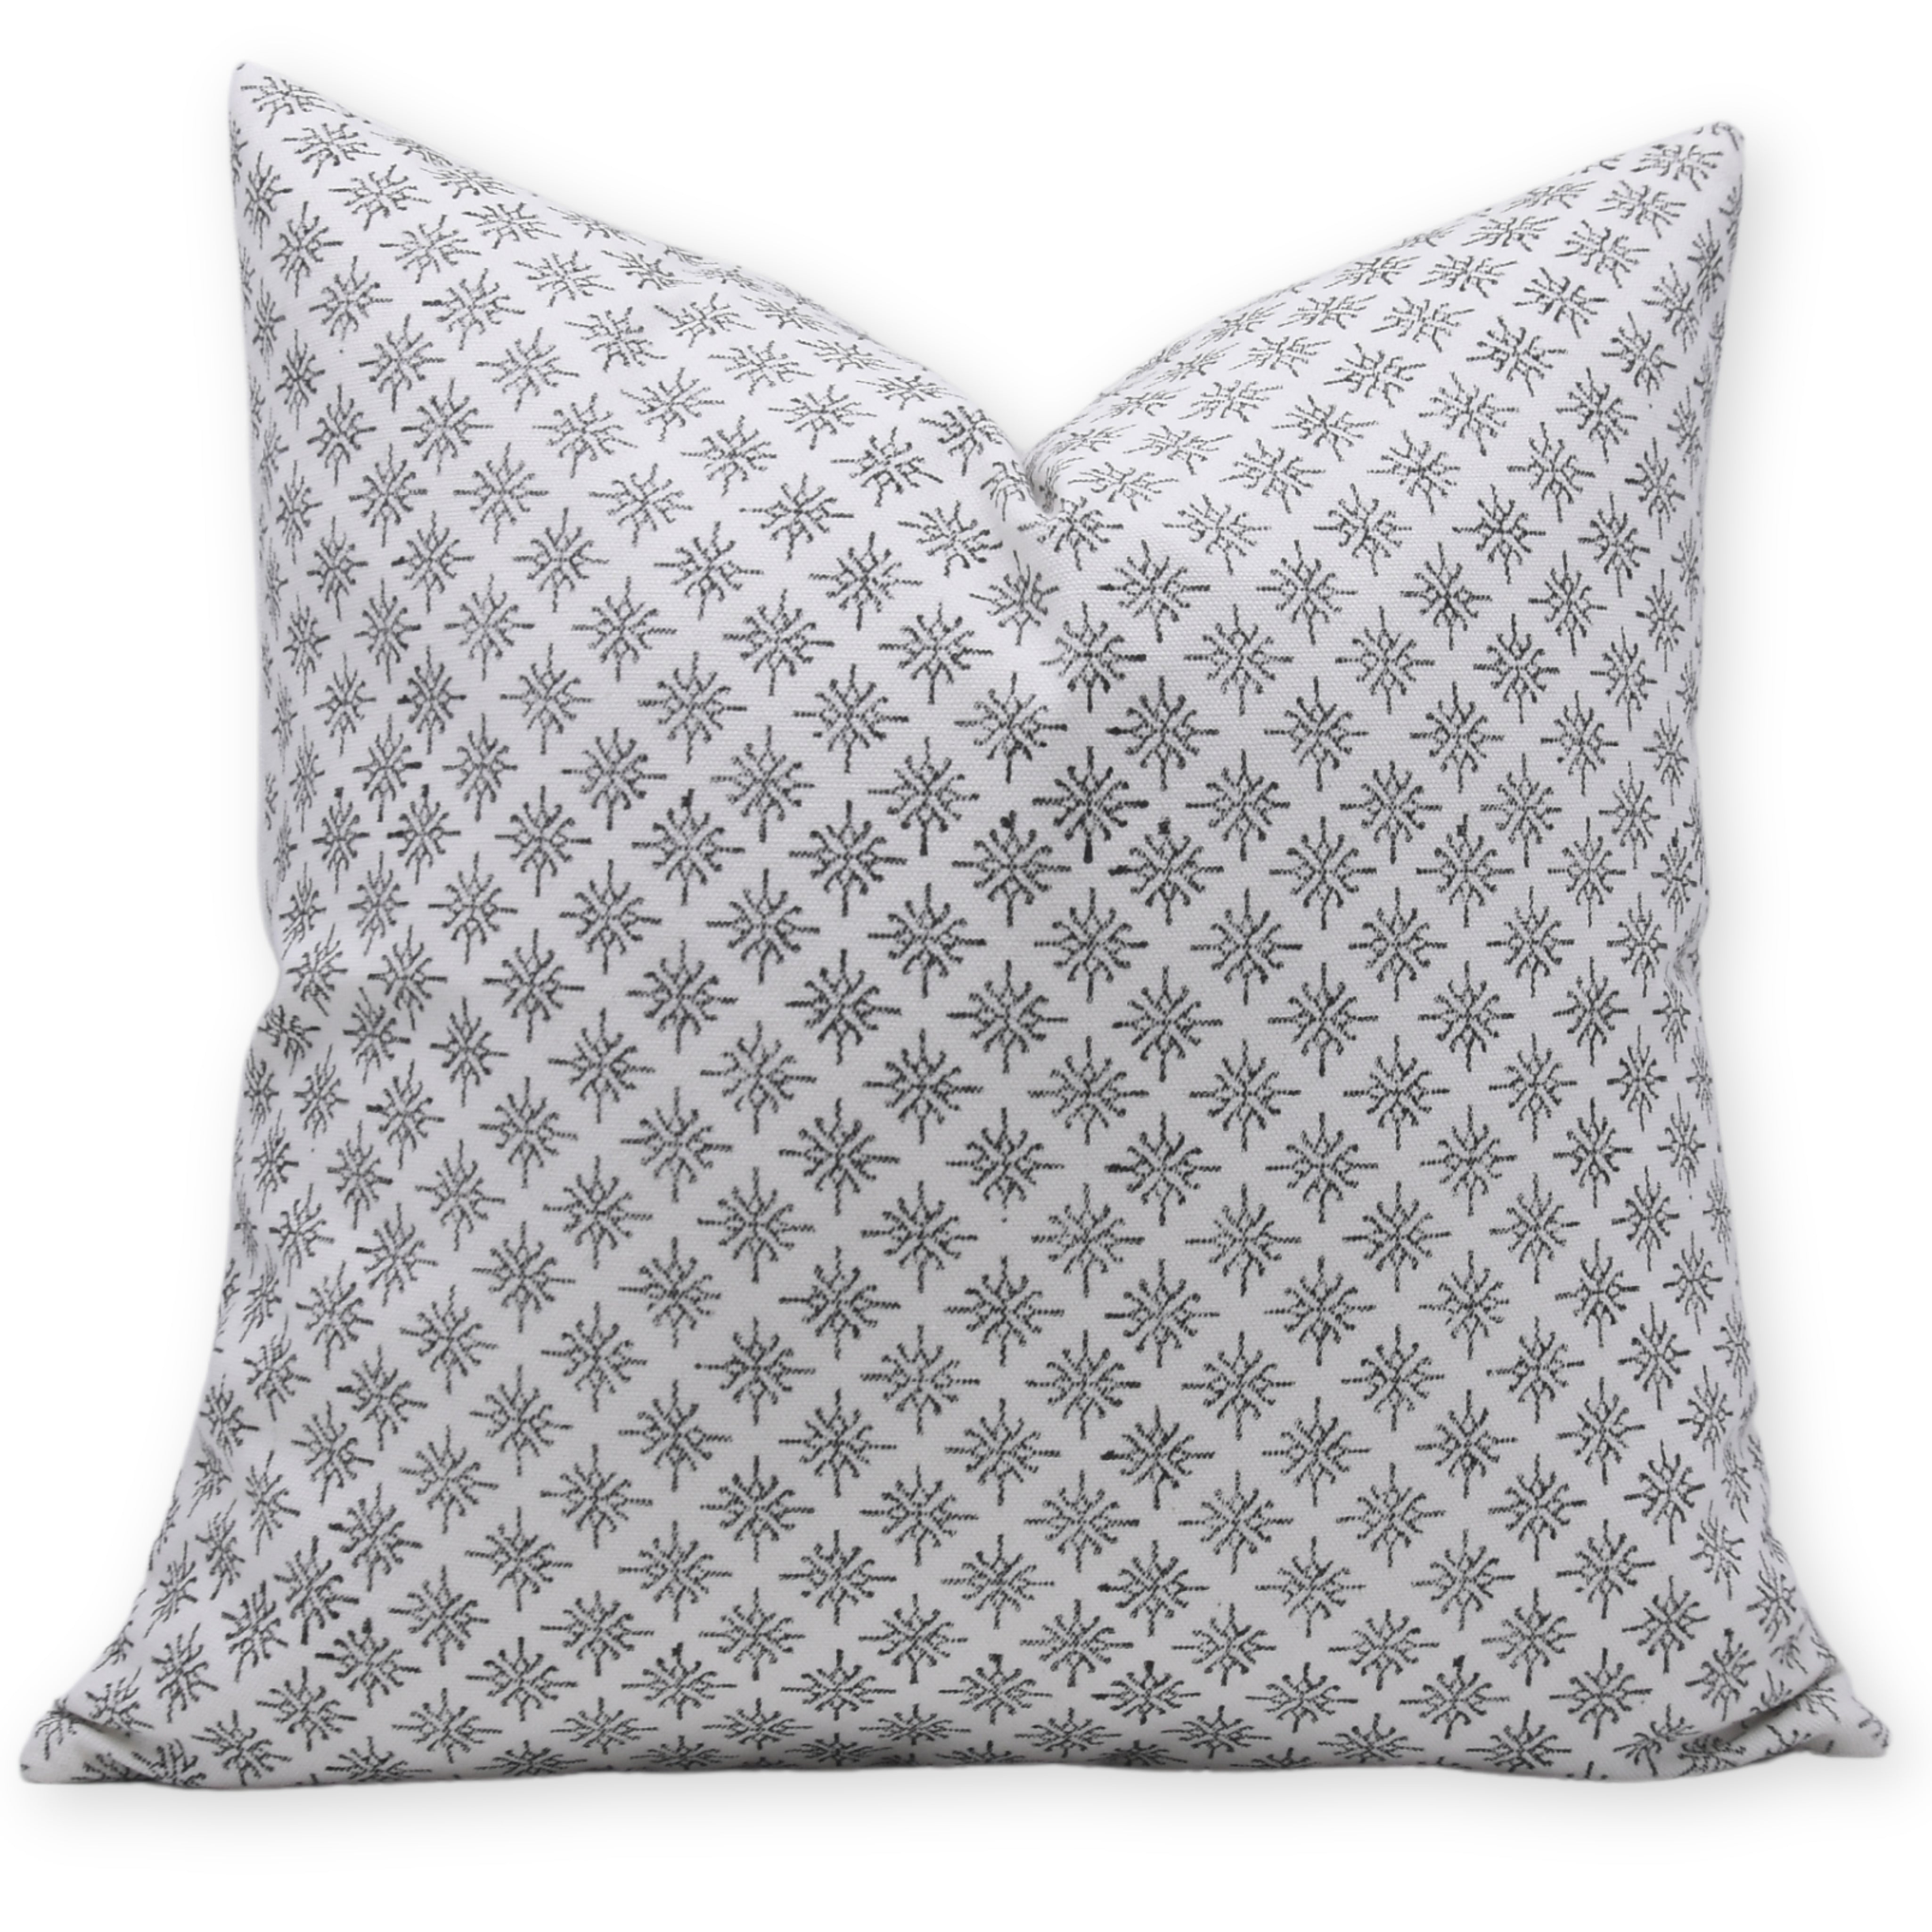 Block print Pillow Cover - Fabdivine